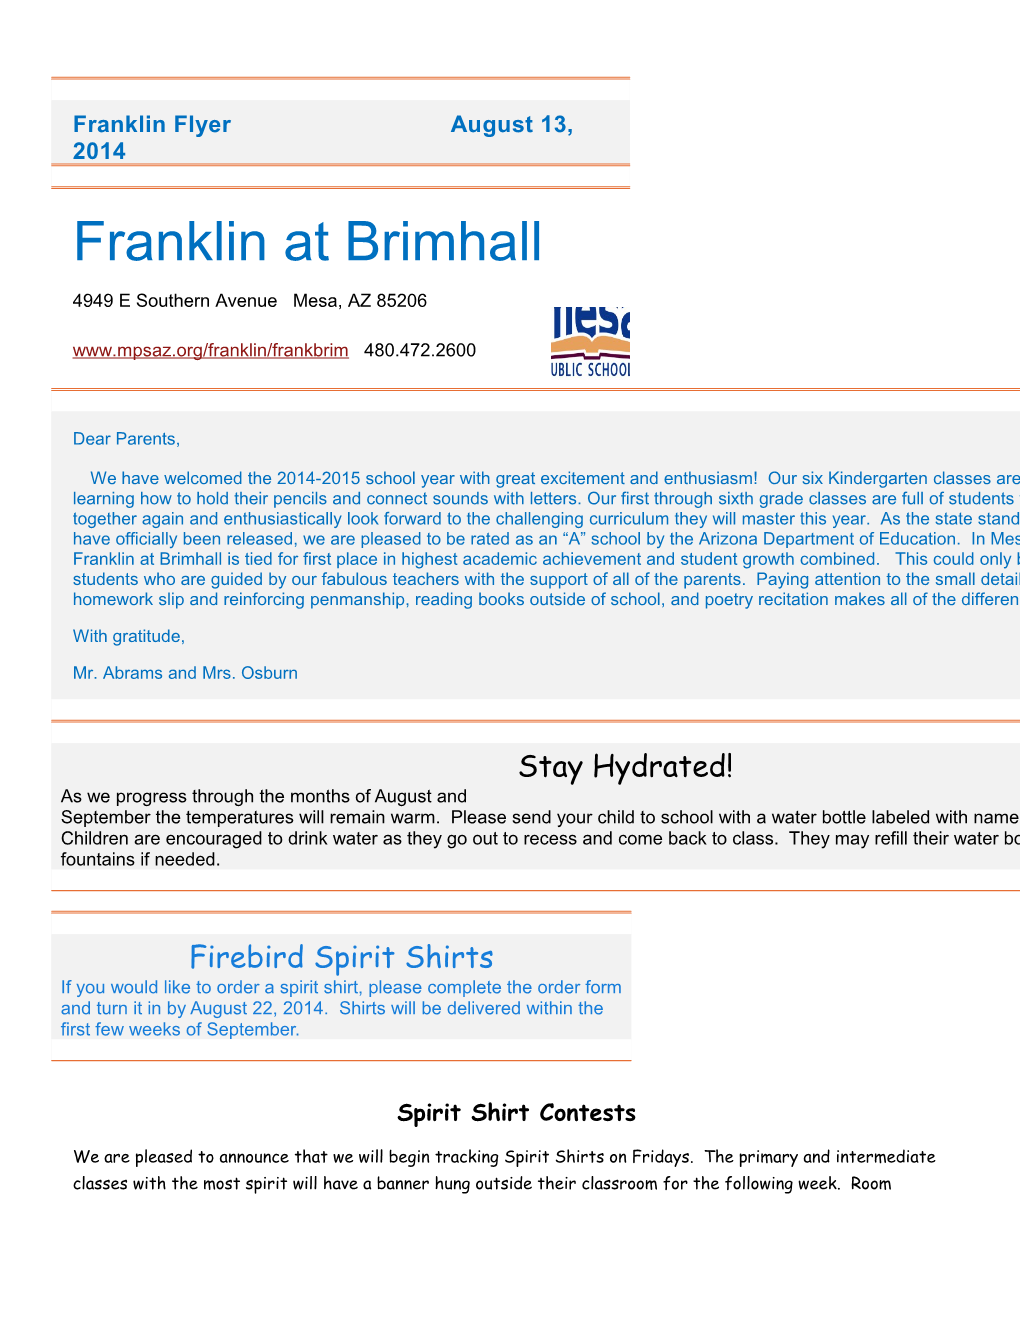 Franklin at Brimhall